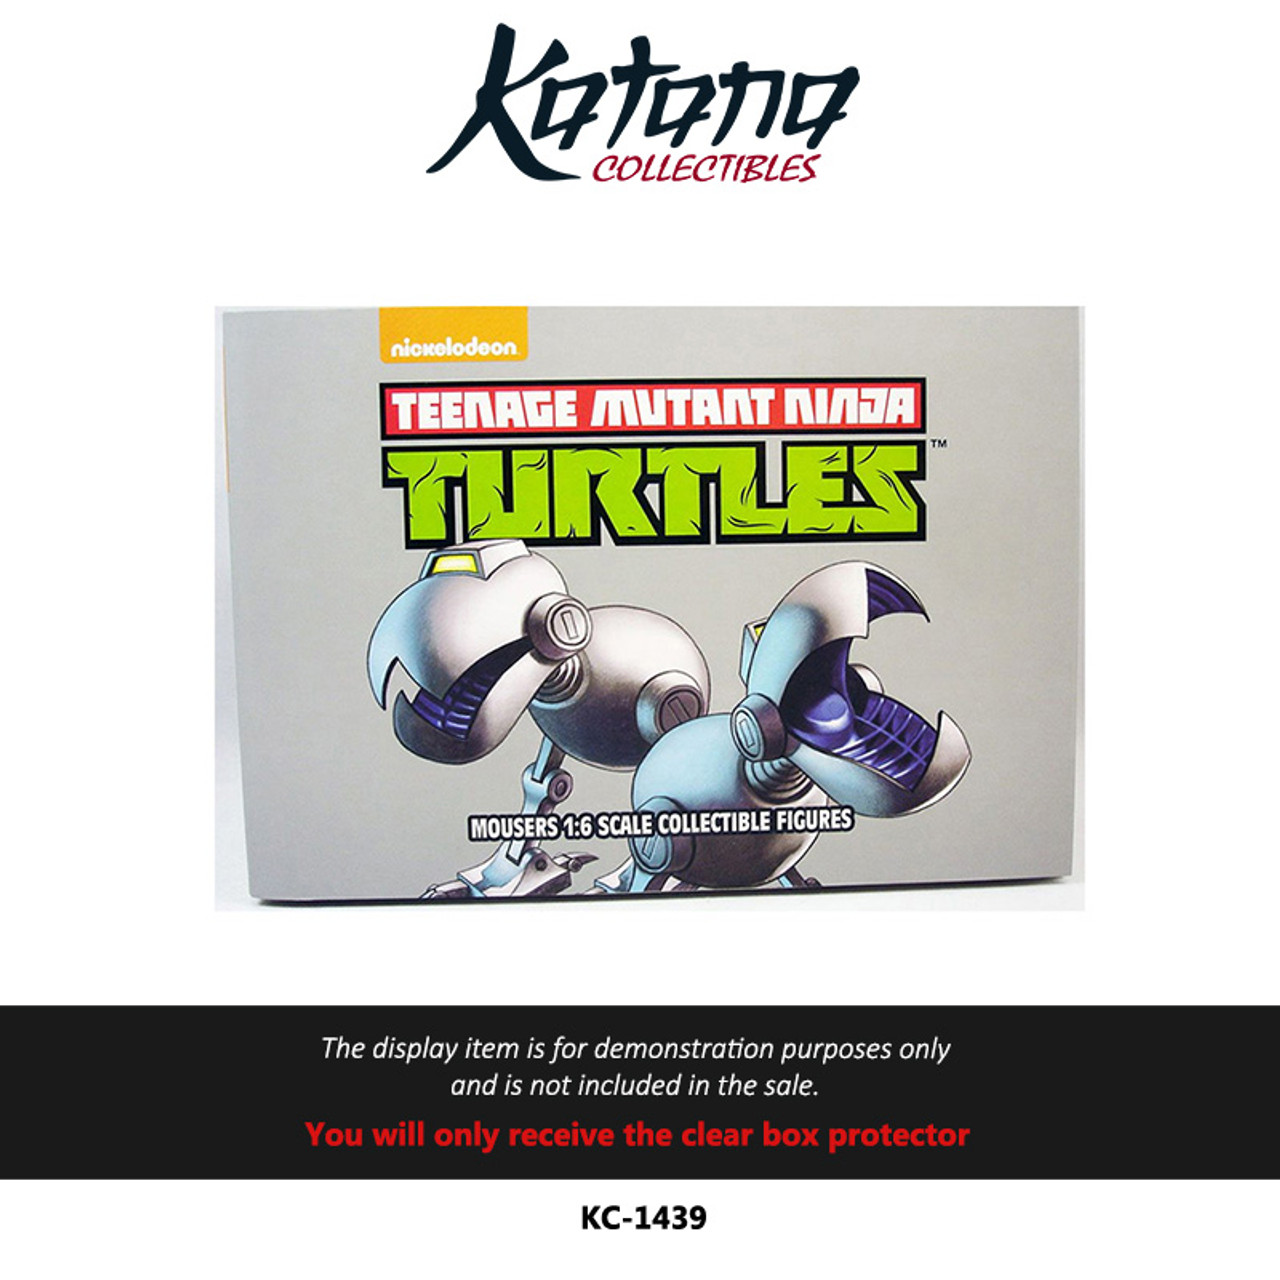 Katana Collectibles Protector For Teenage Mutant Ninja Turtles 2016 Mondo Mousers 1:6 Scale Figures